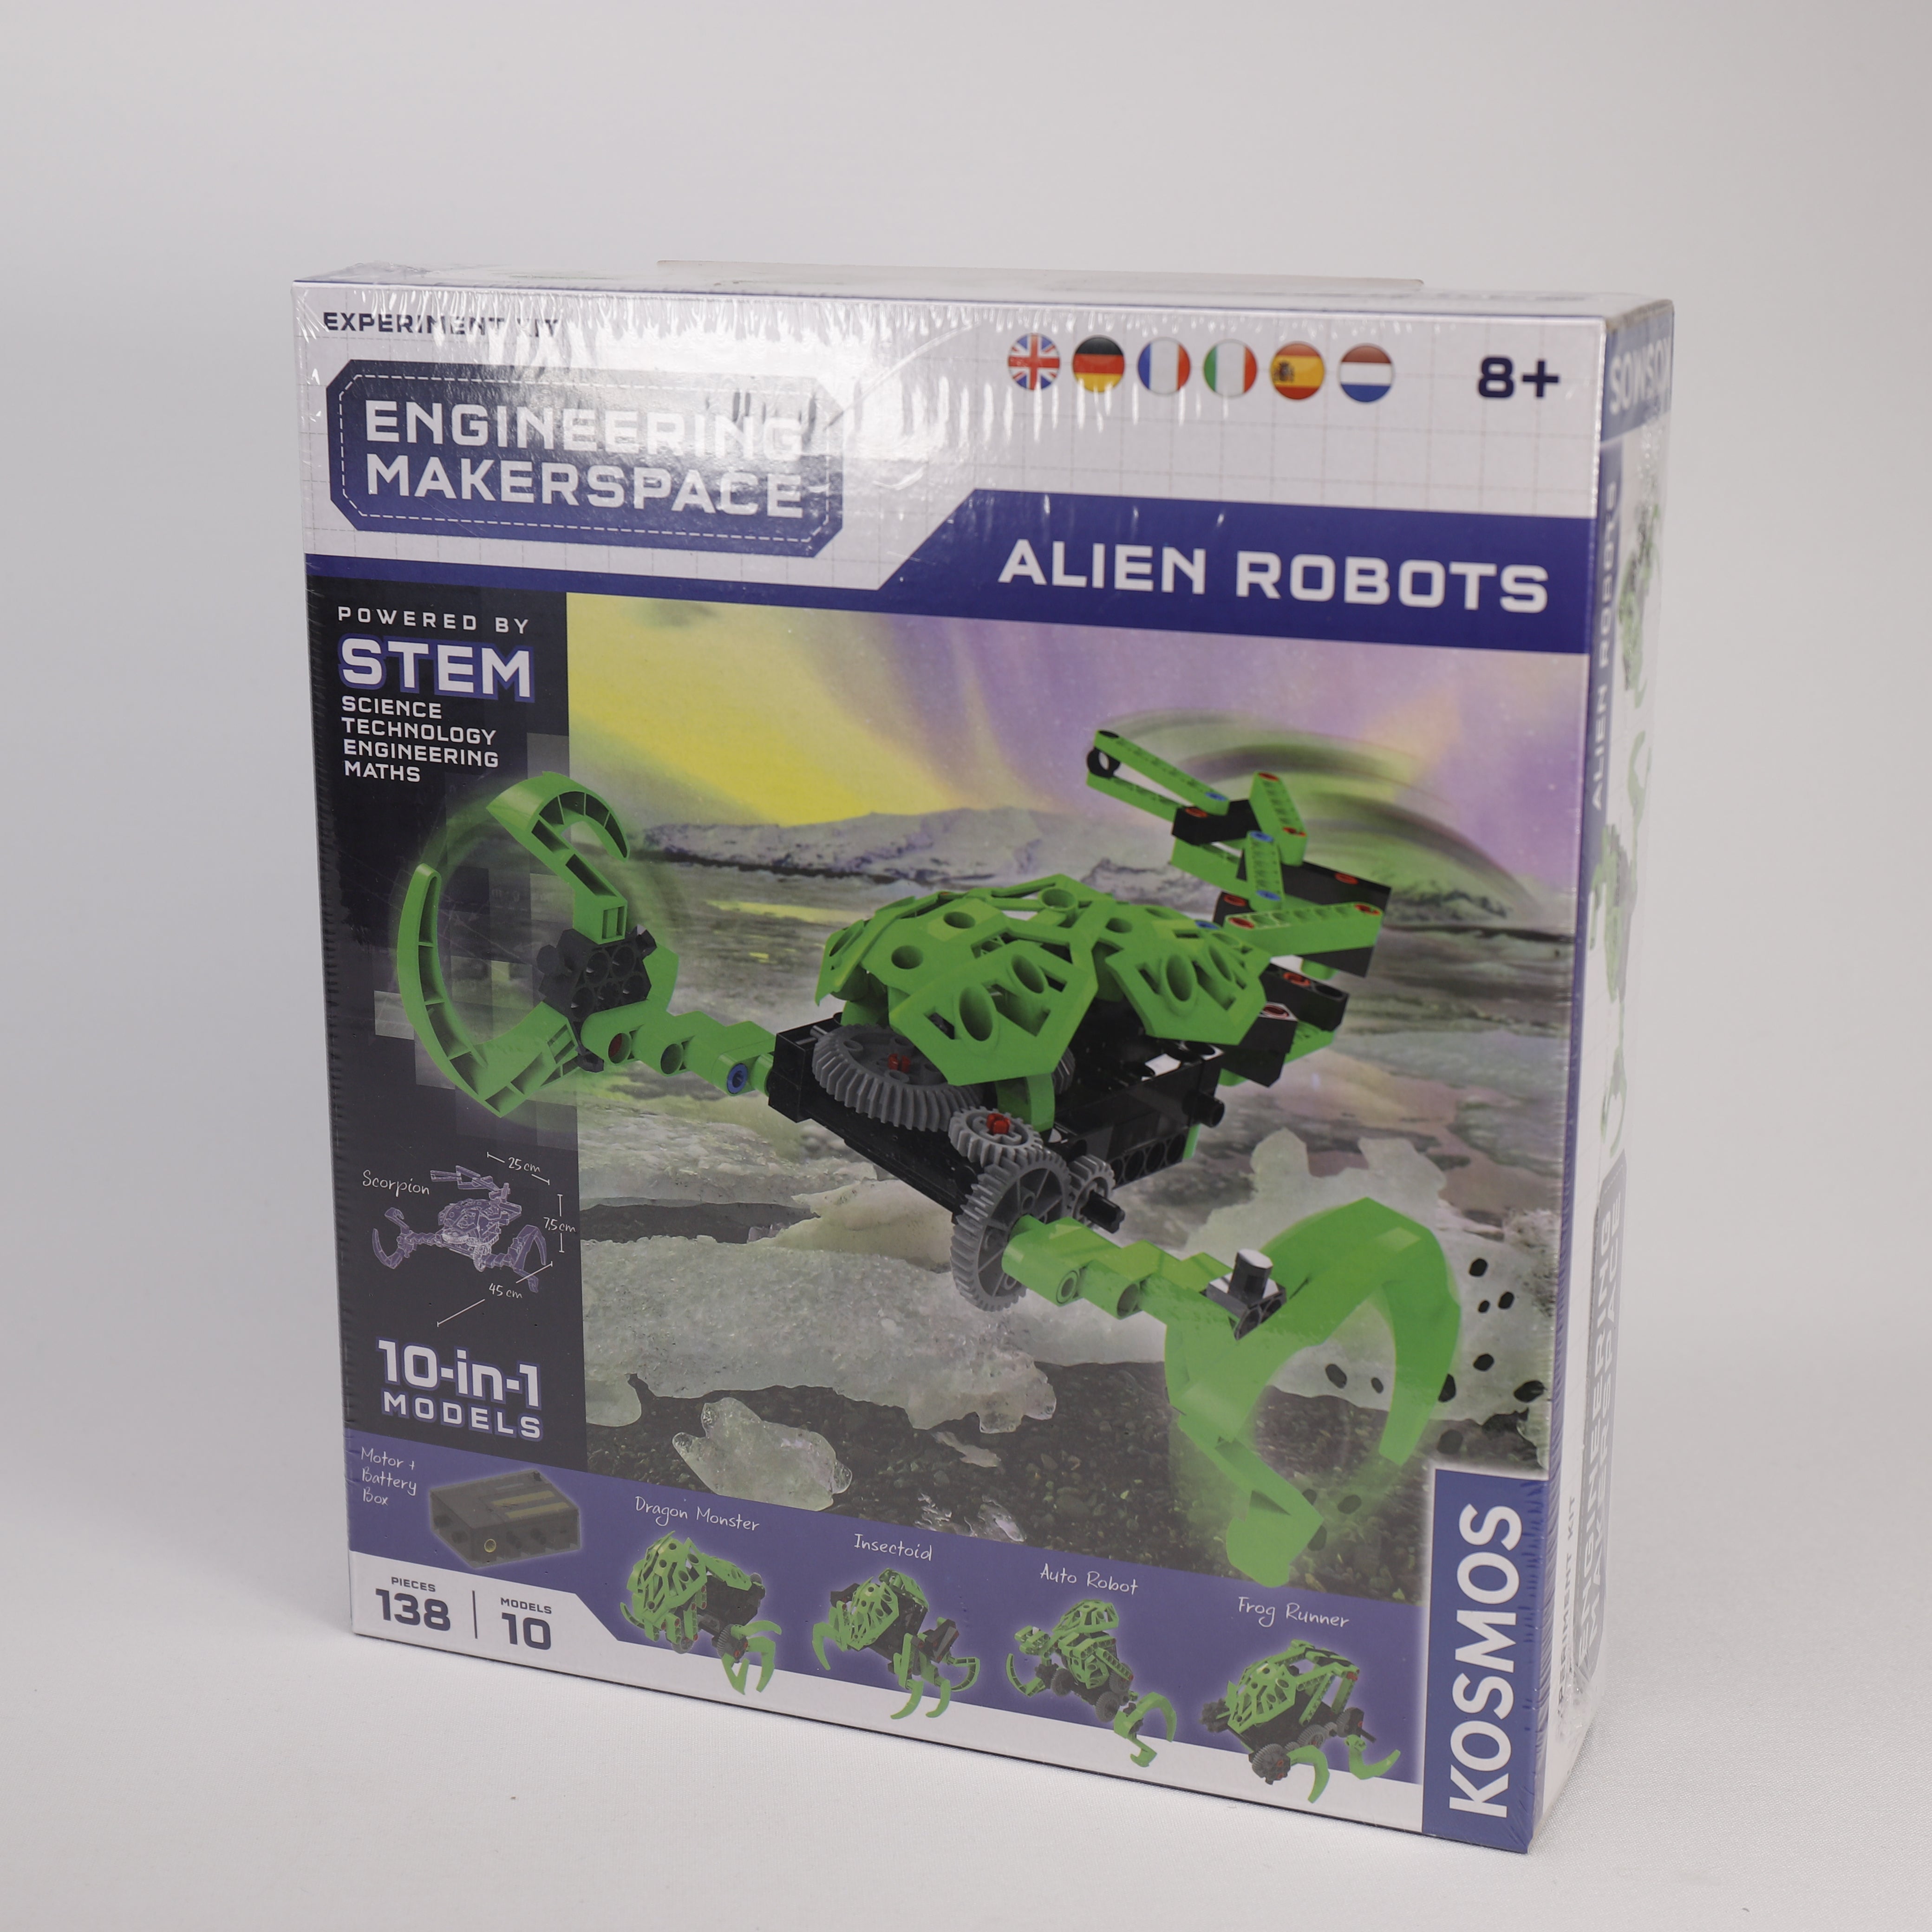 Kosmos Engineering Makerspace Alien Robots, Roboter bauen, 10 in 1 M, Spielzeug